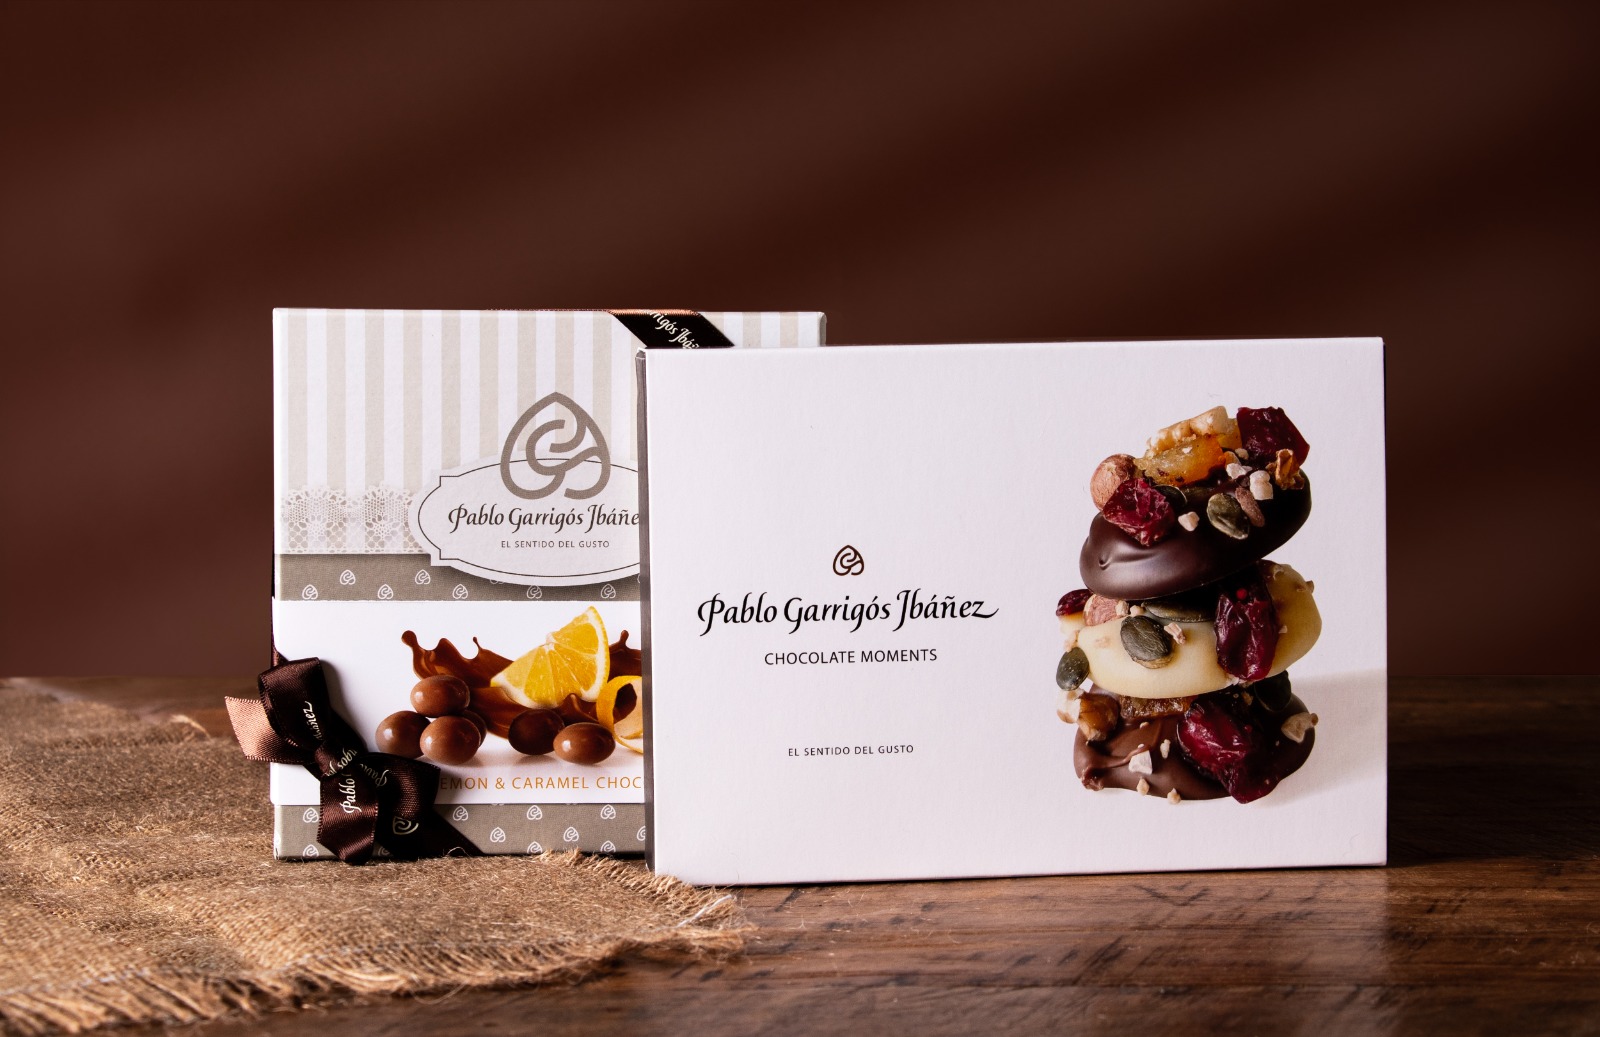 New chocolates from Pablo Garrigós: Lemon & Caramel Chocolate and Chocolate Moments 3 varieties